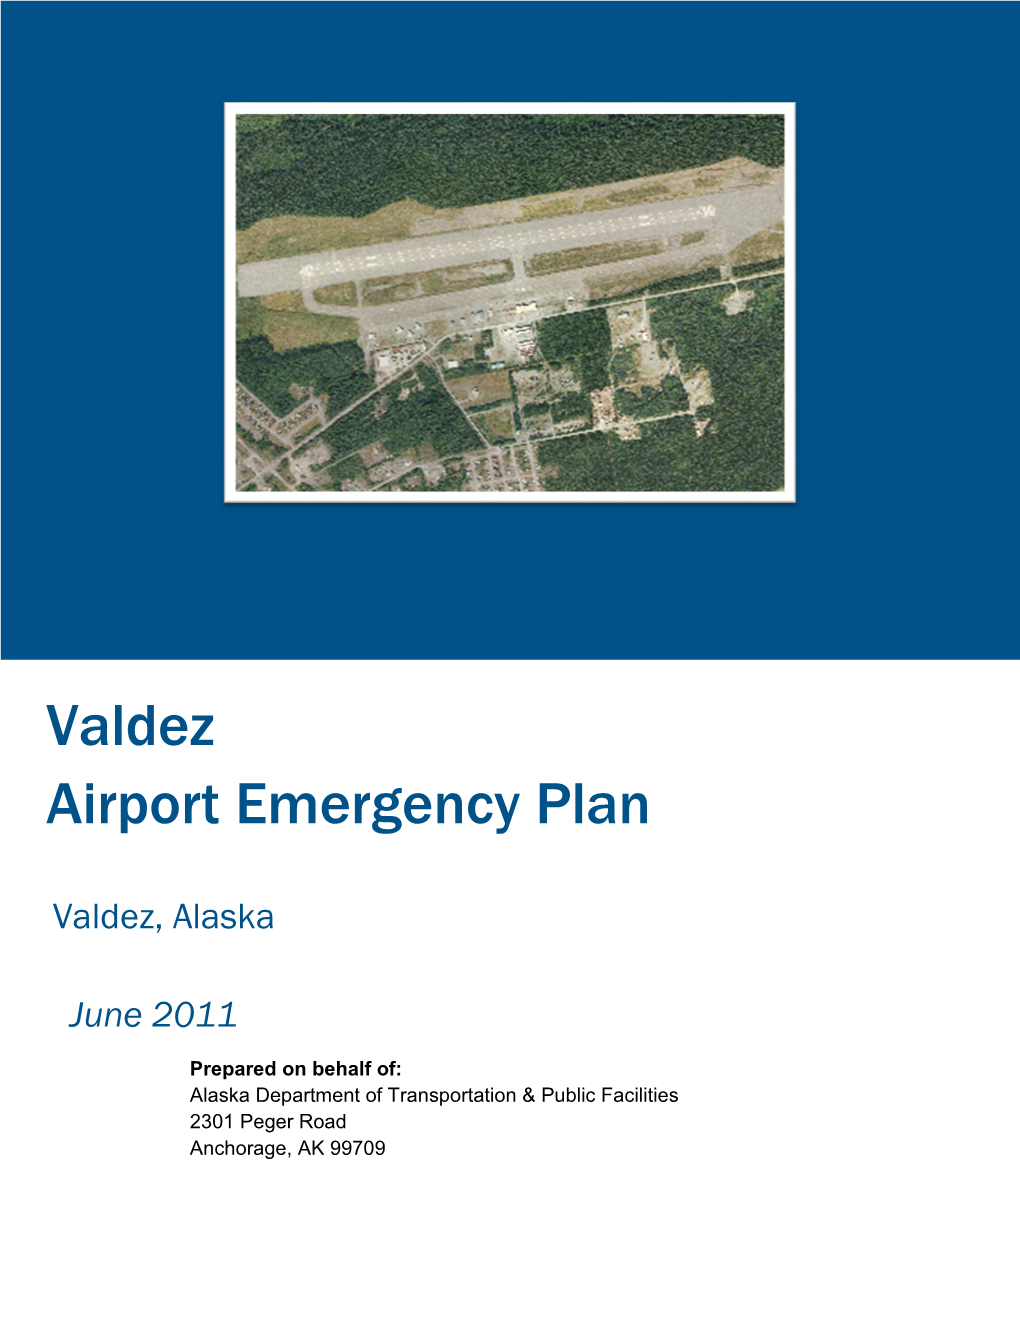 Valdez Airport Emergency Plan